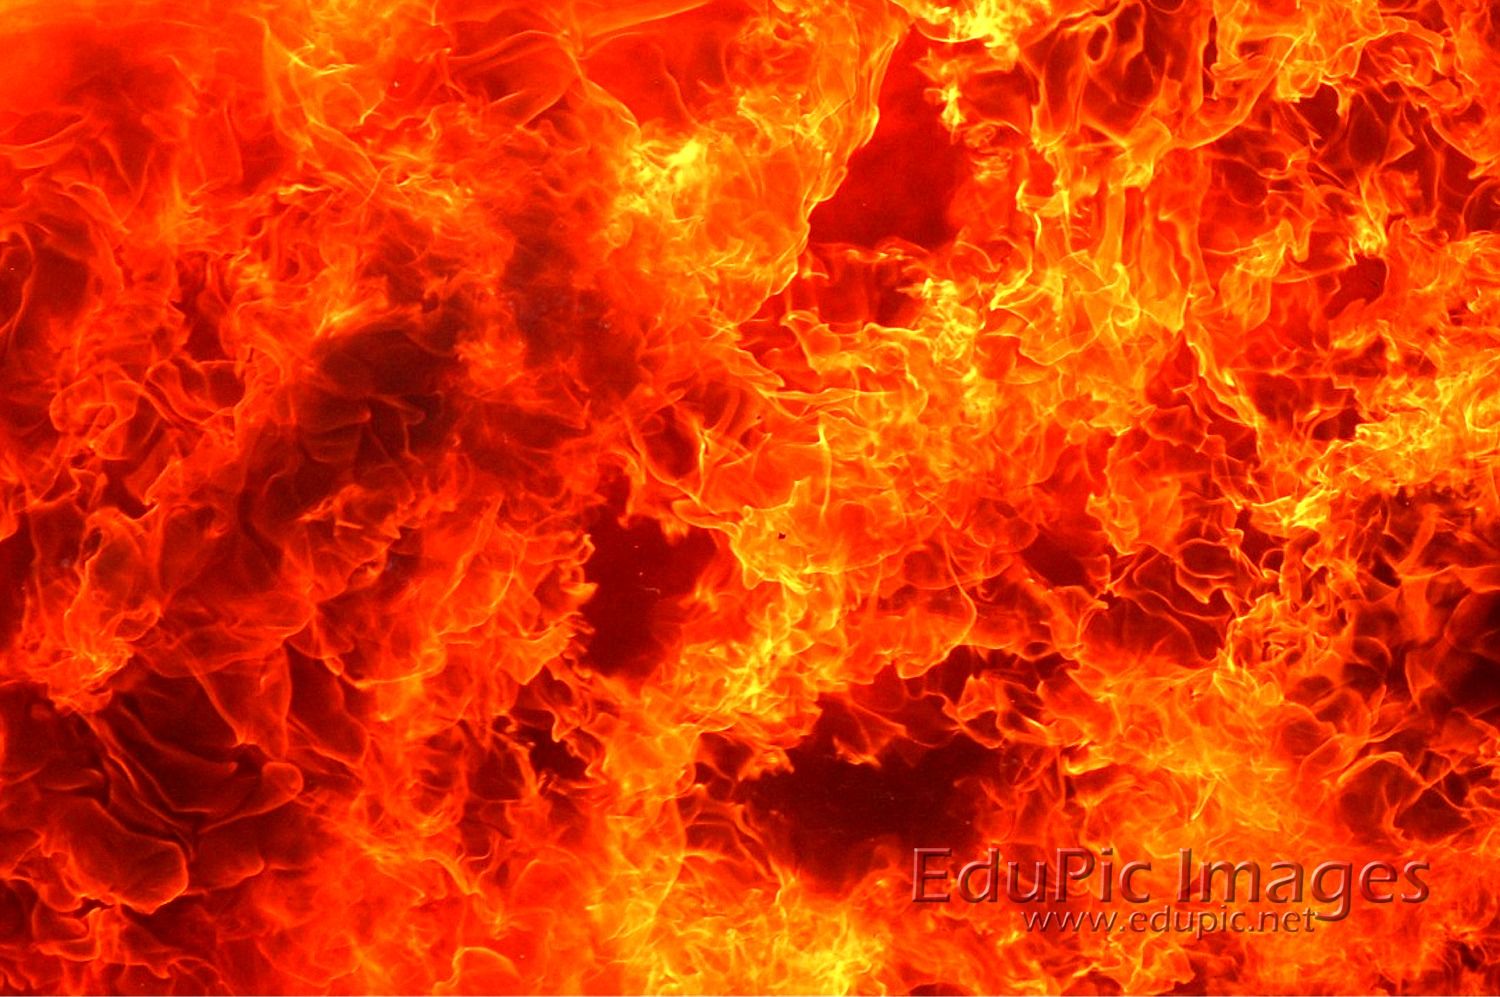 Free download Fire Desktop Image [1500x997] for your Desktop, Mobile & Tablet. Explore Fire Live Wallpaper for Computer. Fire Department Wallpaper, Fire Wallpaper Free Download, Live Fire Wallpaper for Desktop